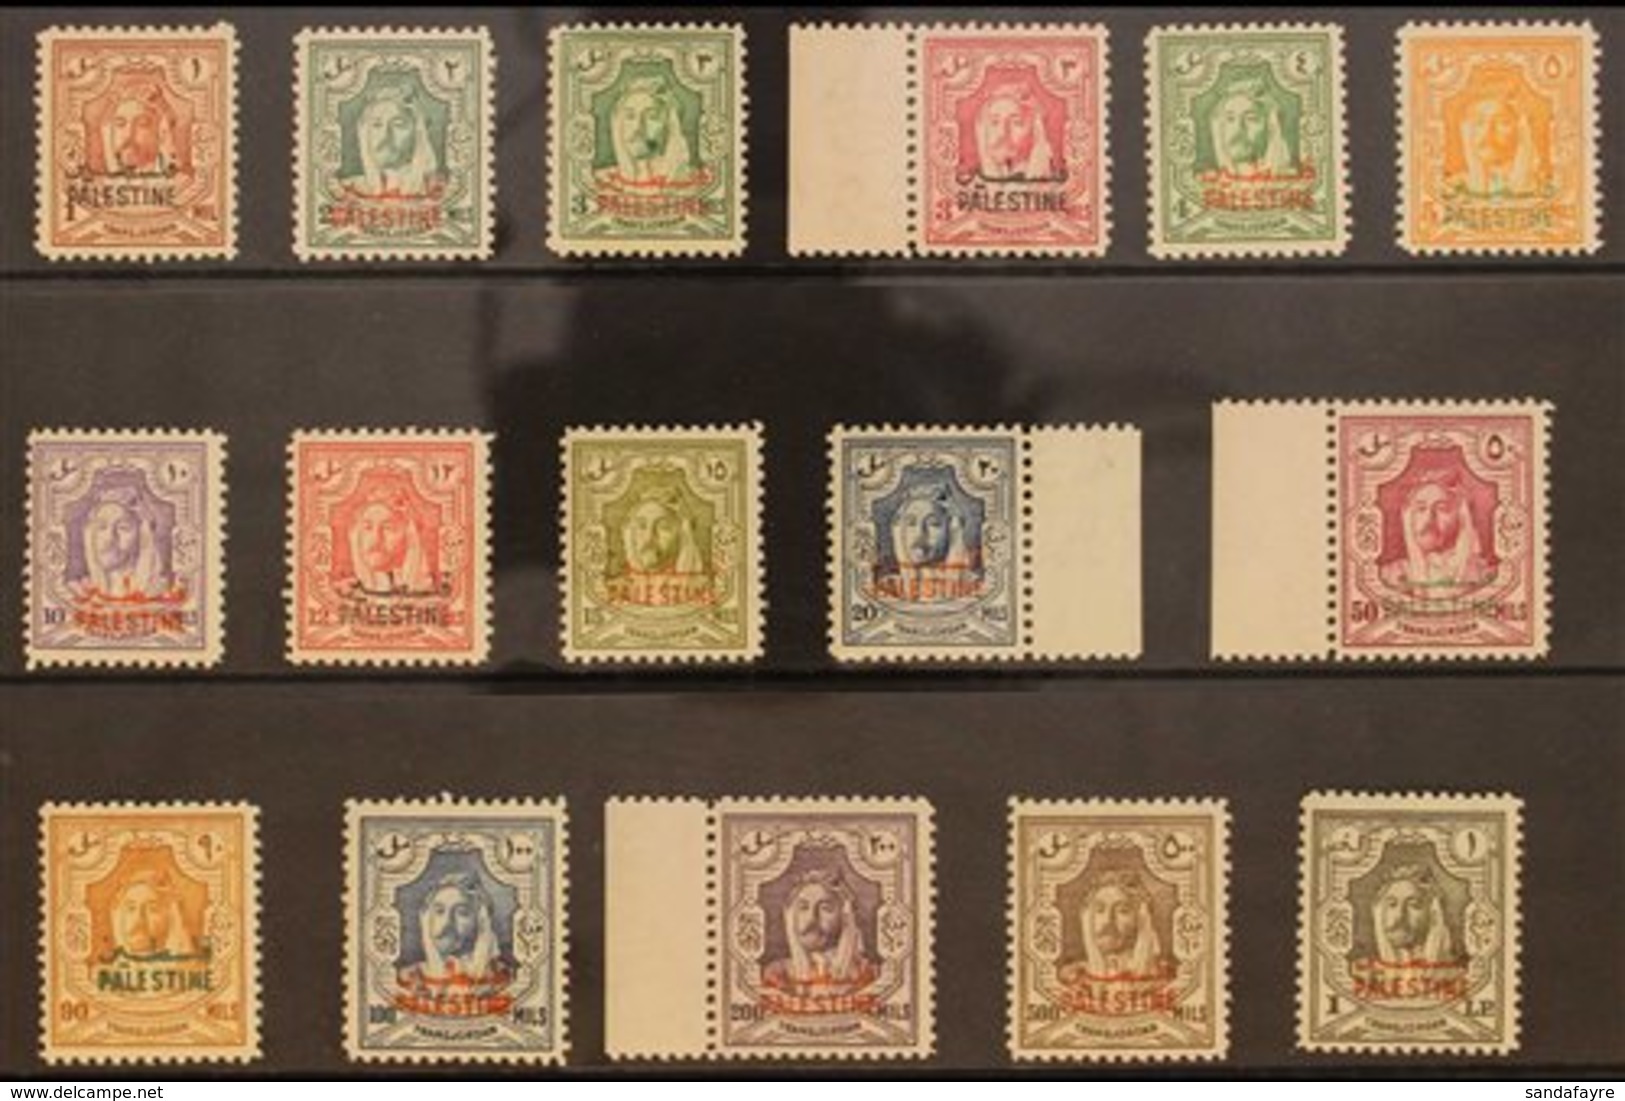 OCCUPATION OF PALESTINE 1948 Jordan Stamps Opt'd "PALESTINE", SG P1/16, Very Fine, Lightly Hinged Mint (16 Stamps) For M - Jordan